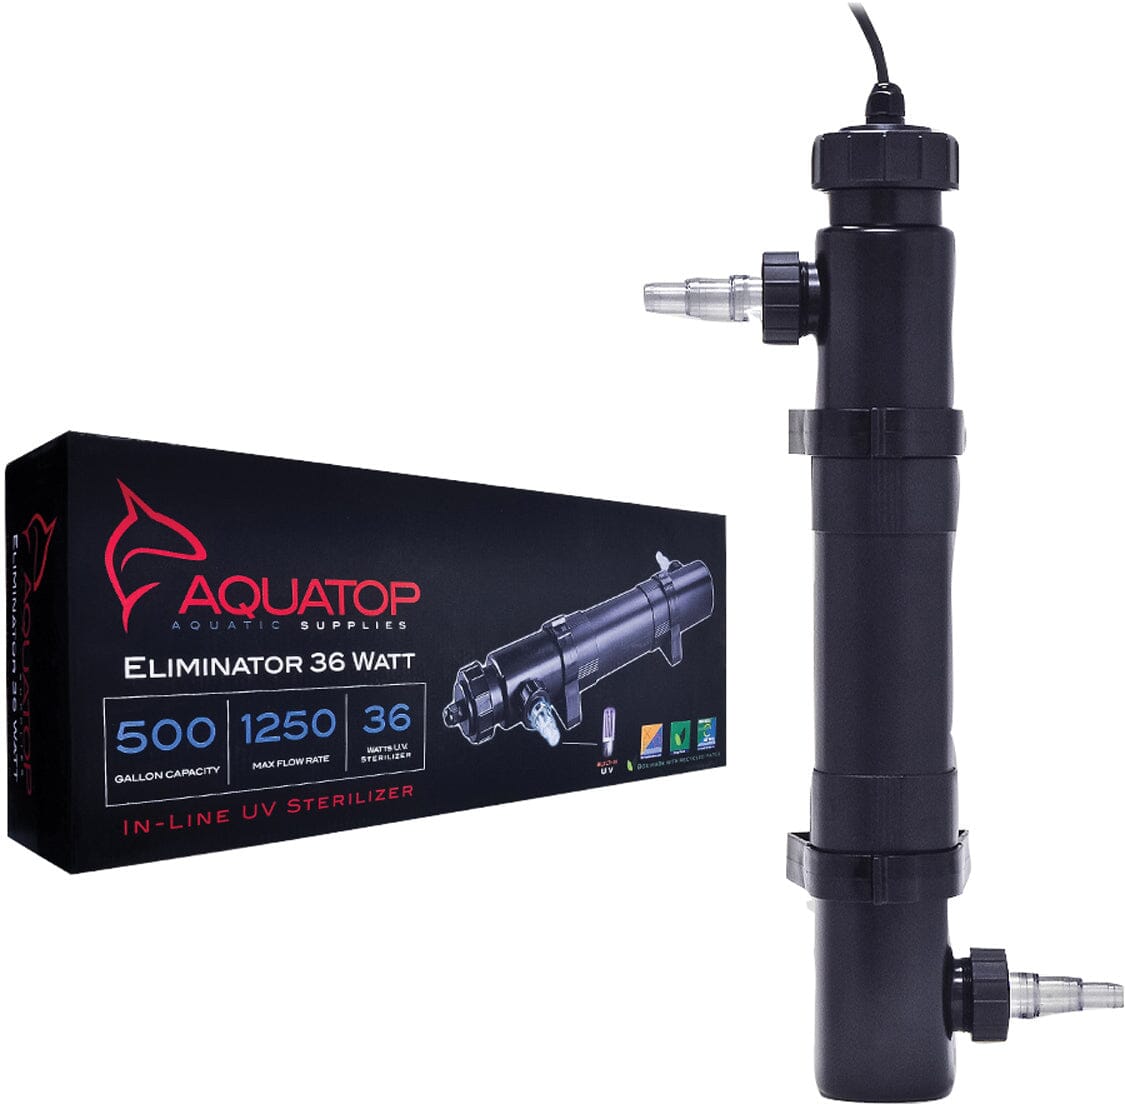 Aquatop Eliminator In-Line UV Sterilizer Aquatic UV Sterilizers - Black - 500 Gal - 36 Watt  